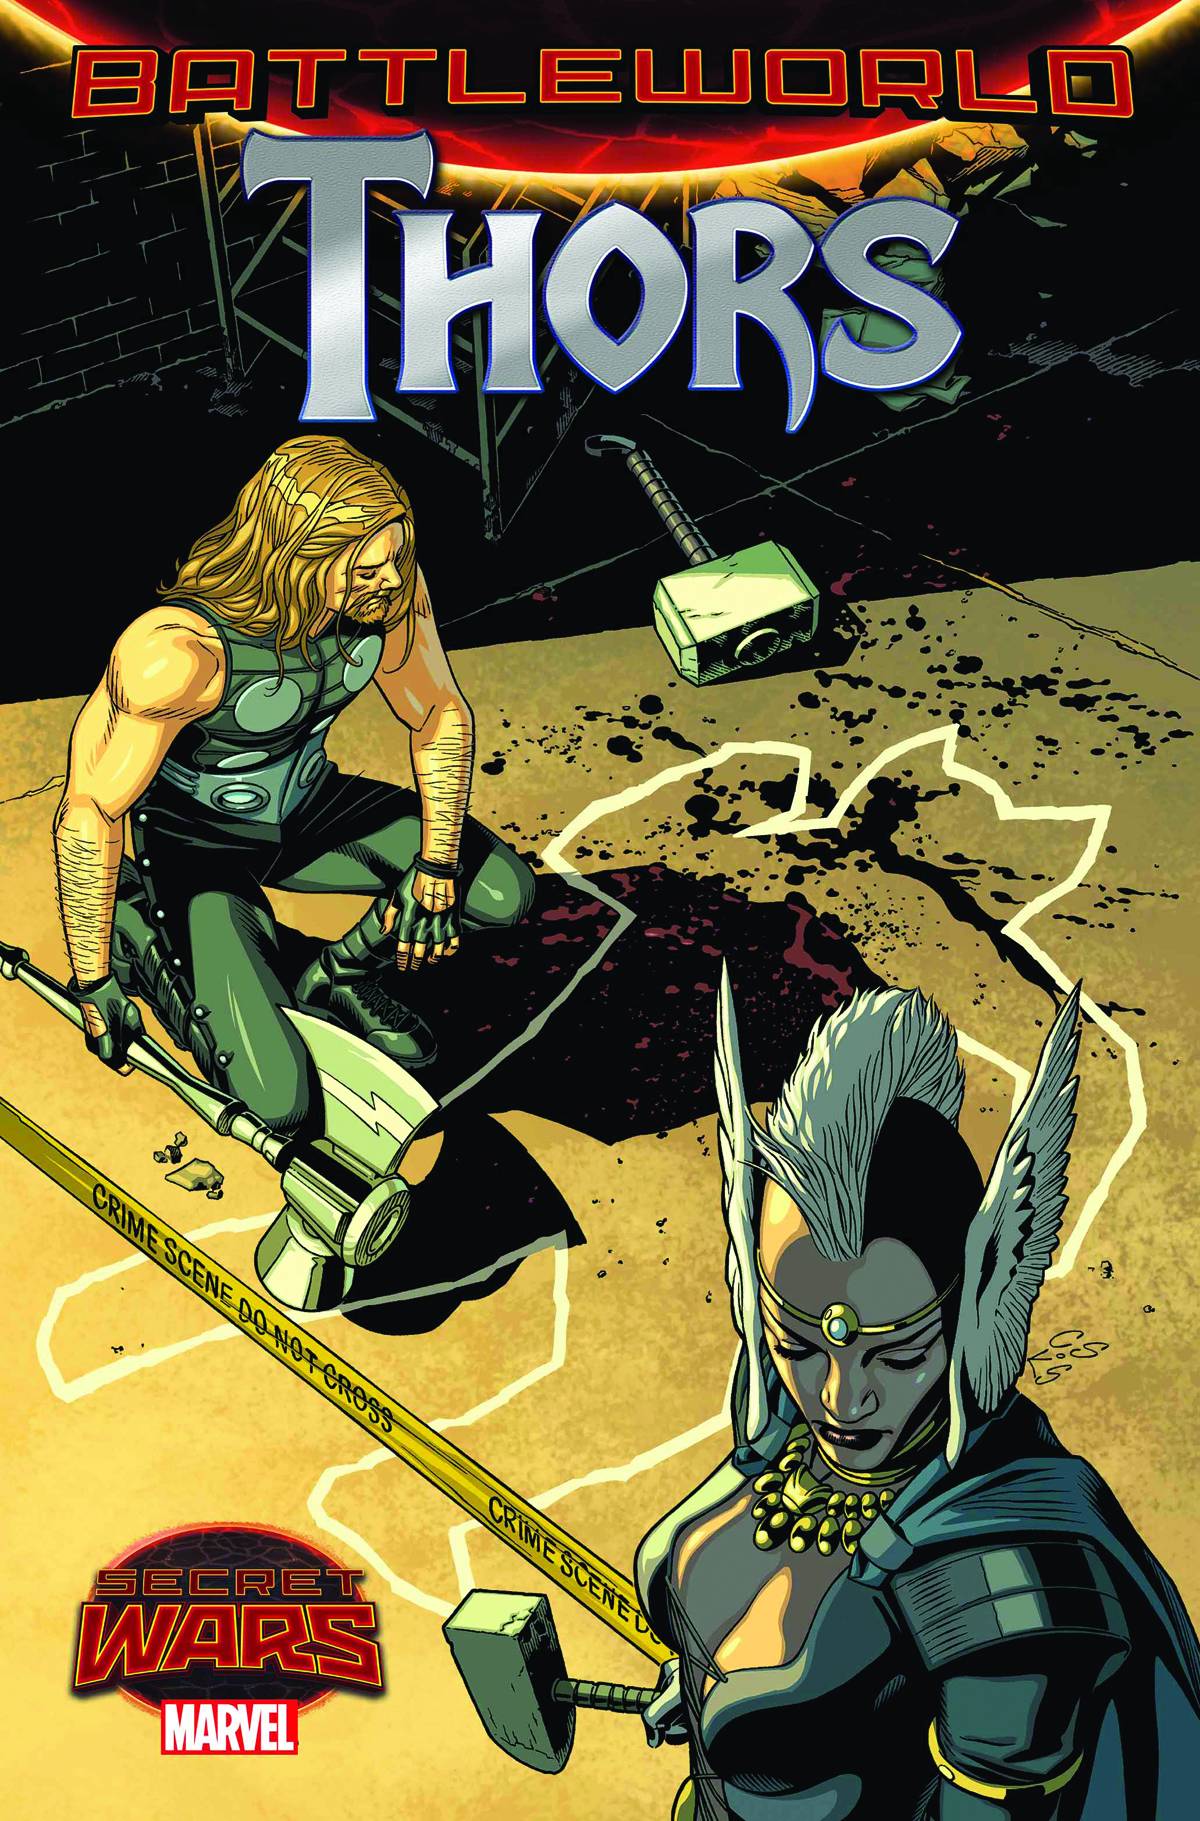 Thors #2 (2015)